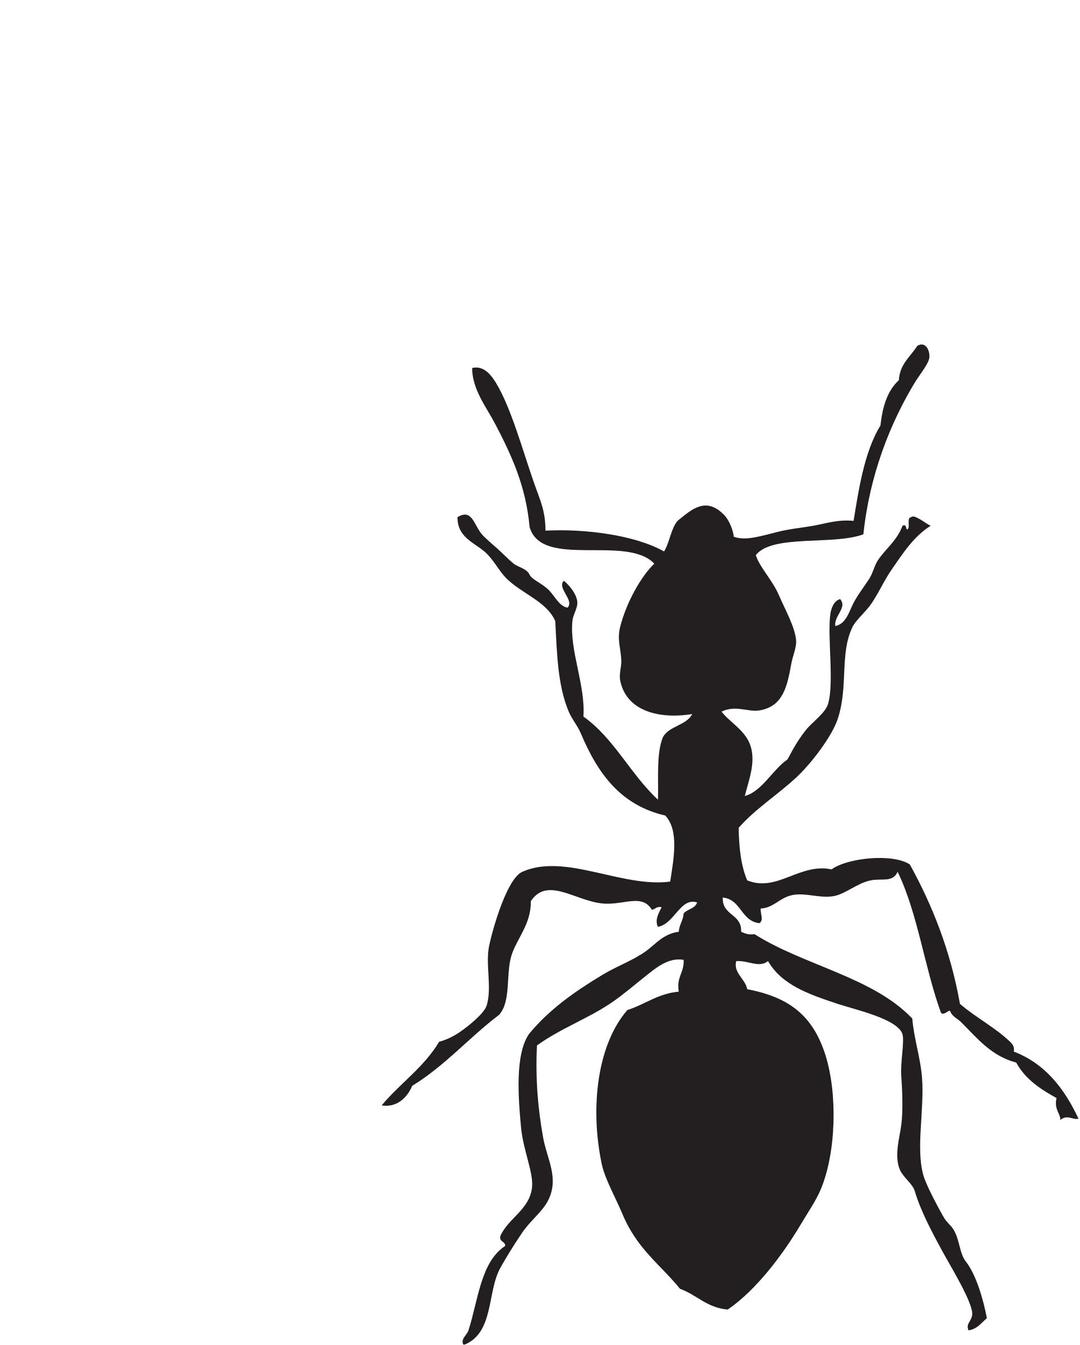 Acrobat ant png transparent